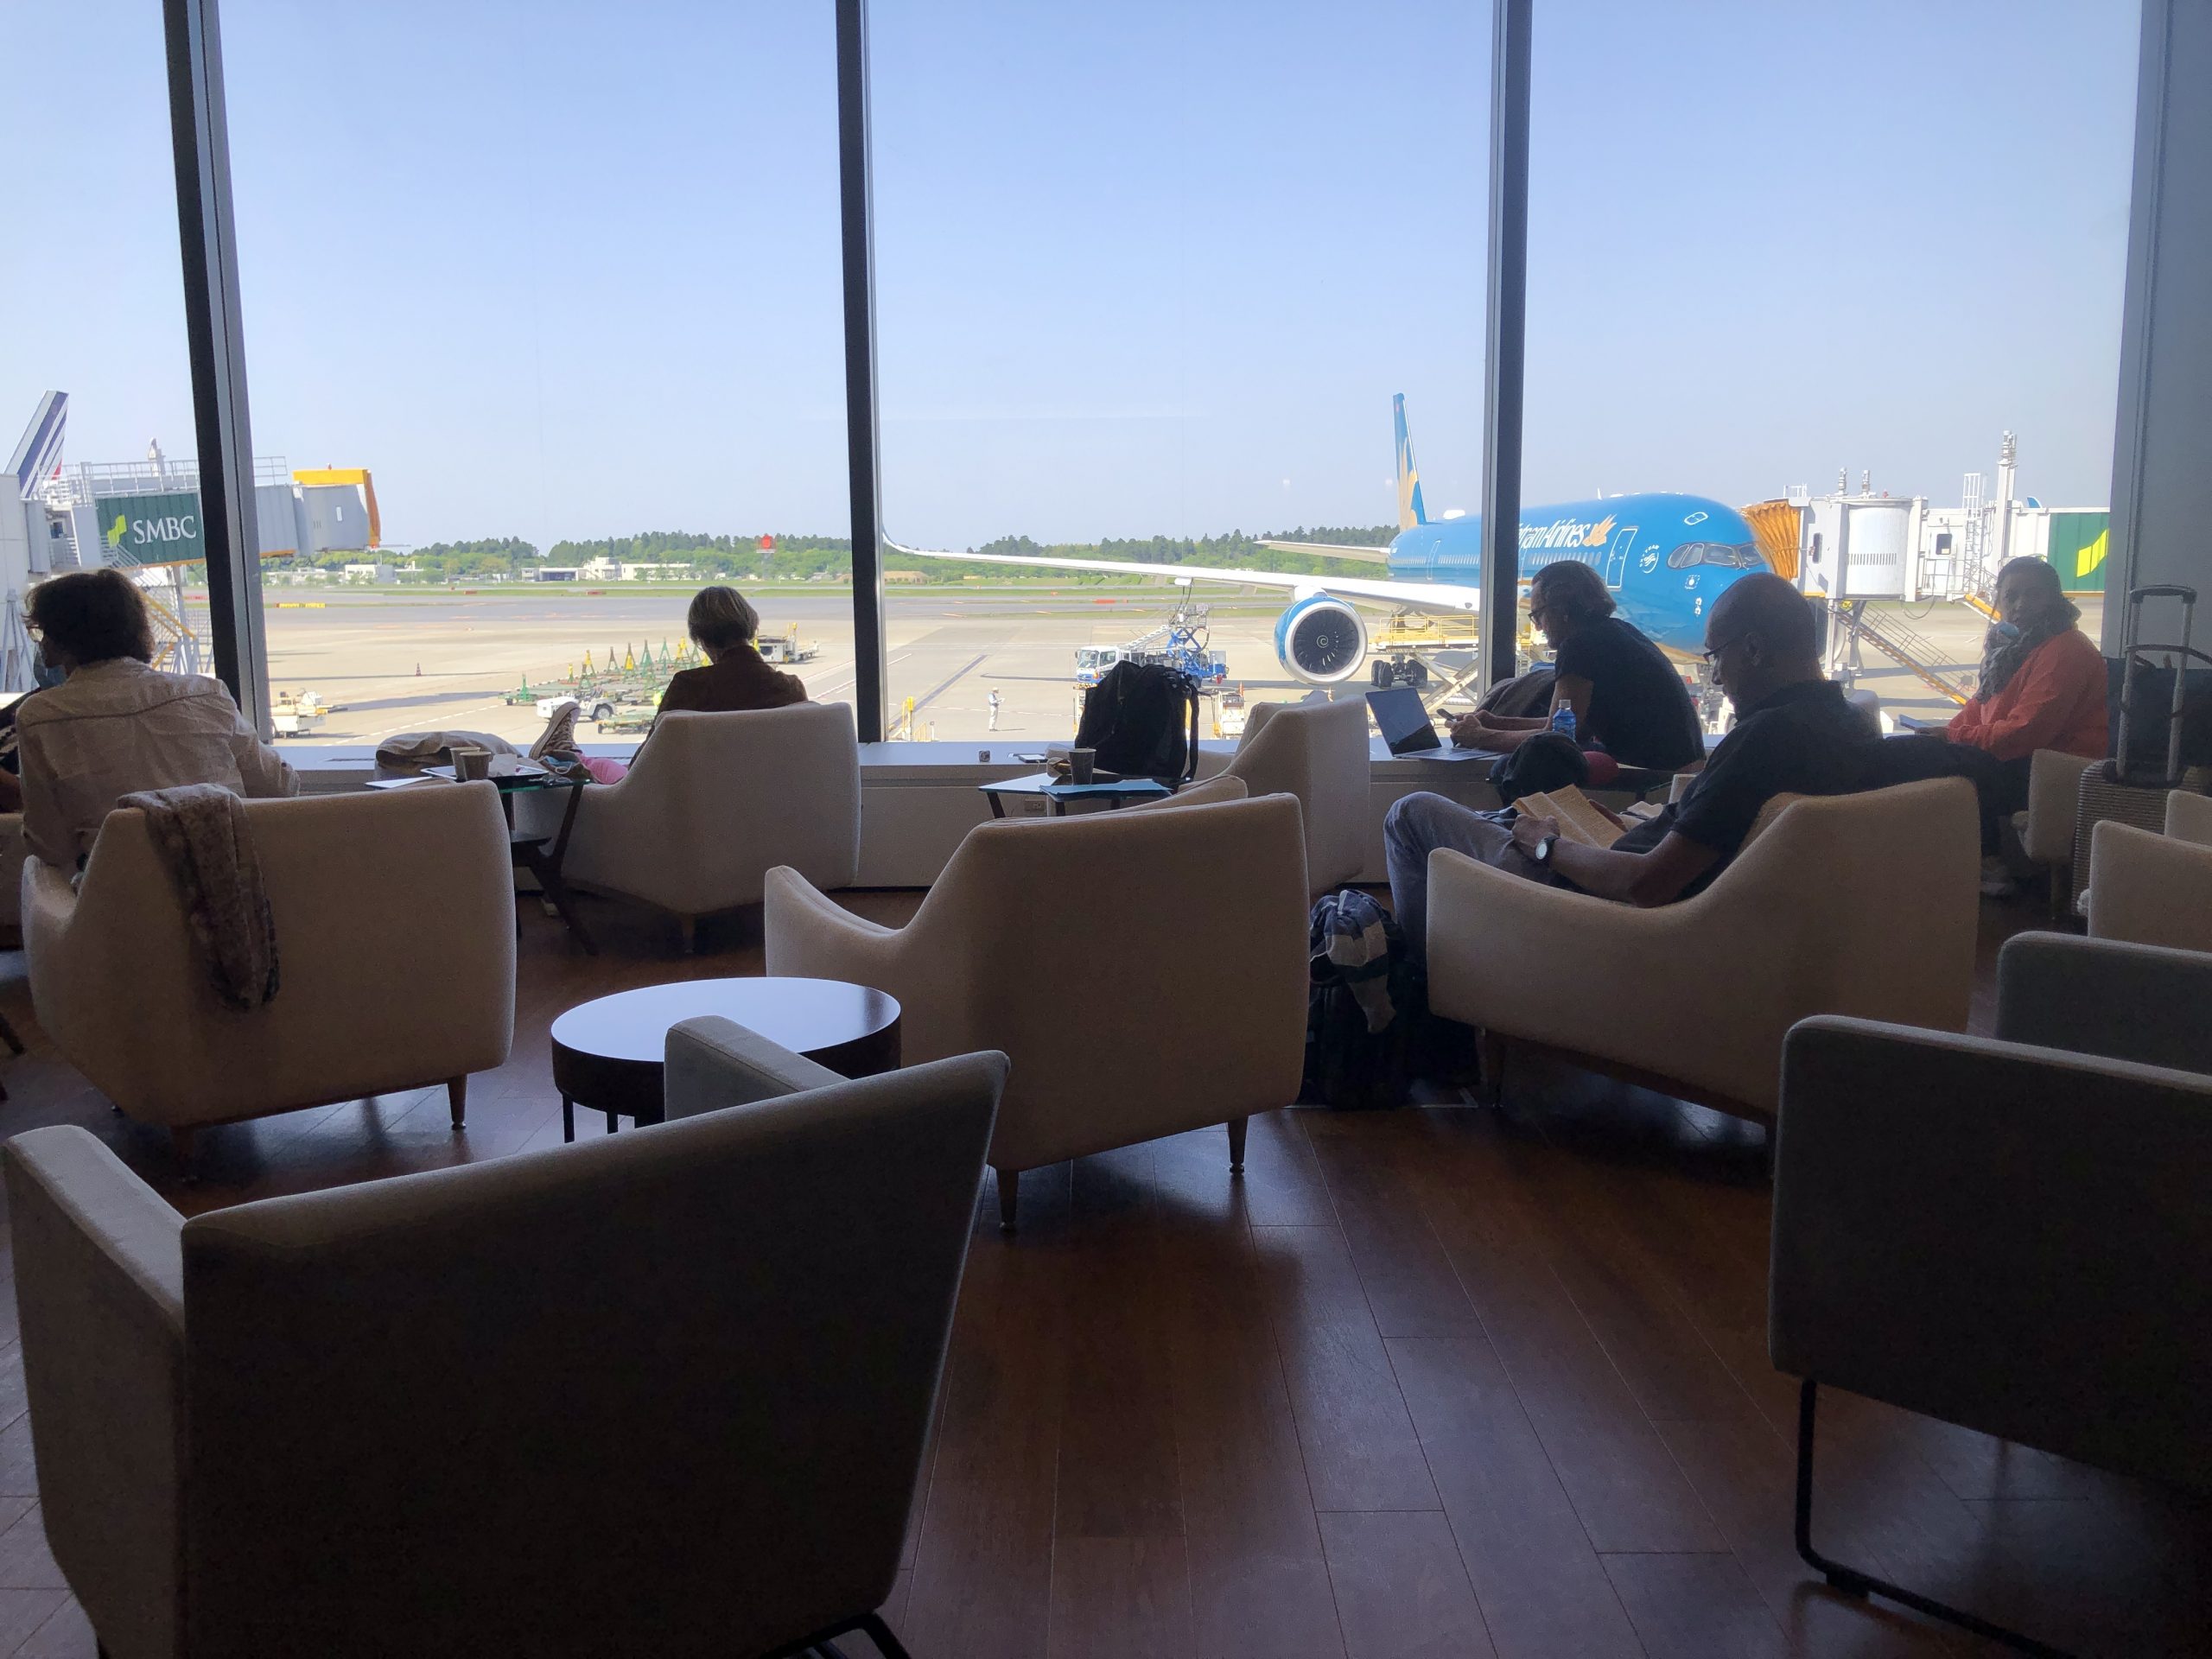 Lounge Review : 成田空港(NRT) ターミナル1 ナリタトラベルラウンジ(Narita Travel Lounge)